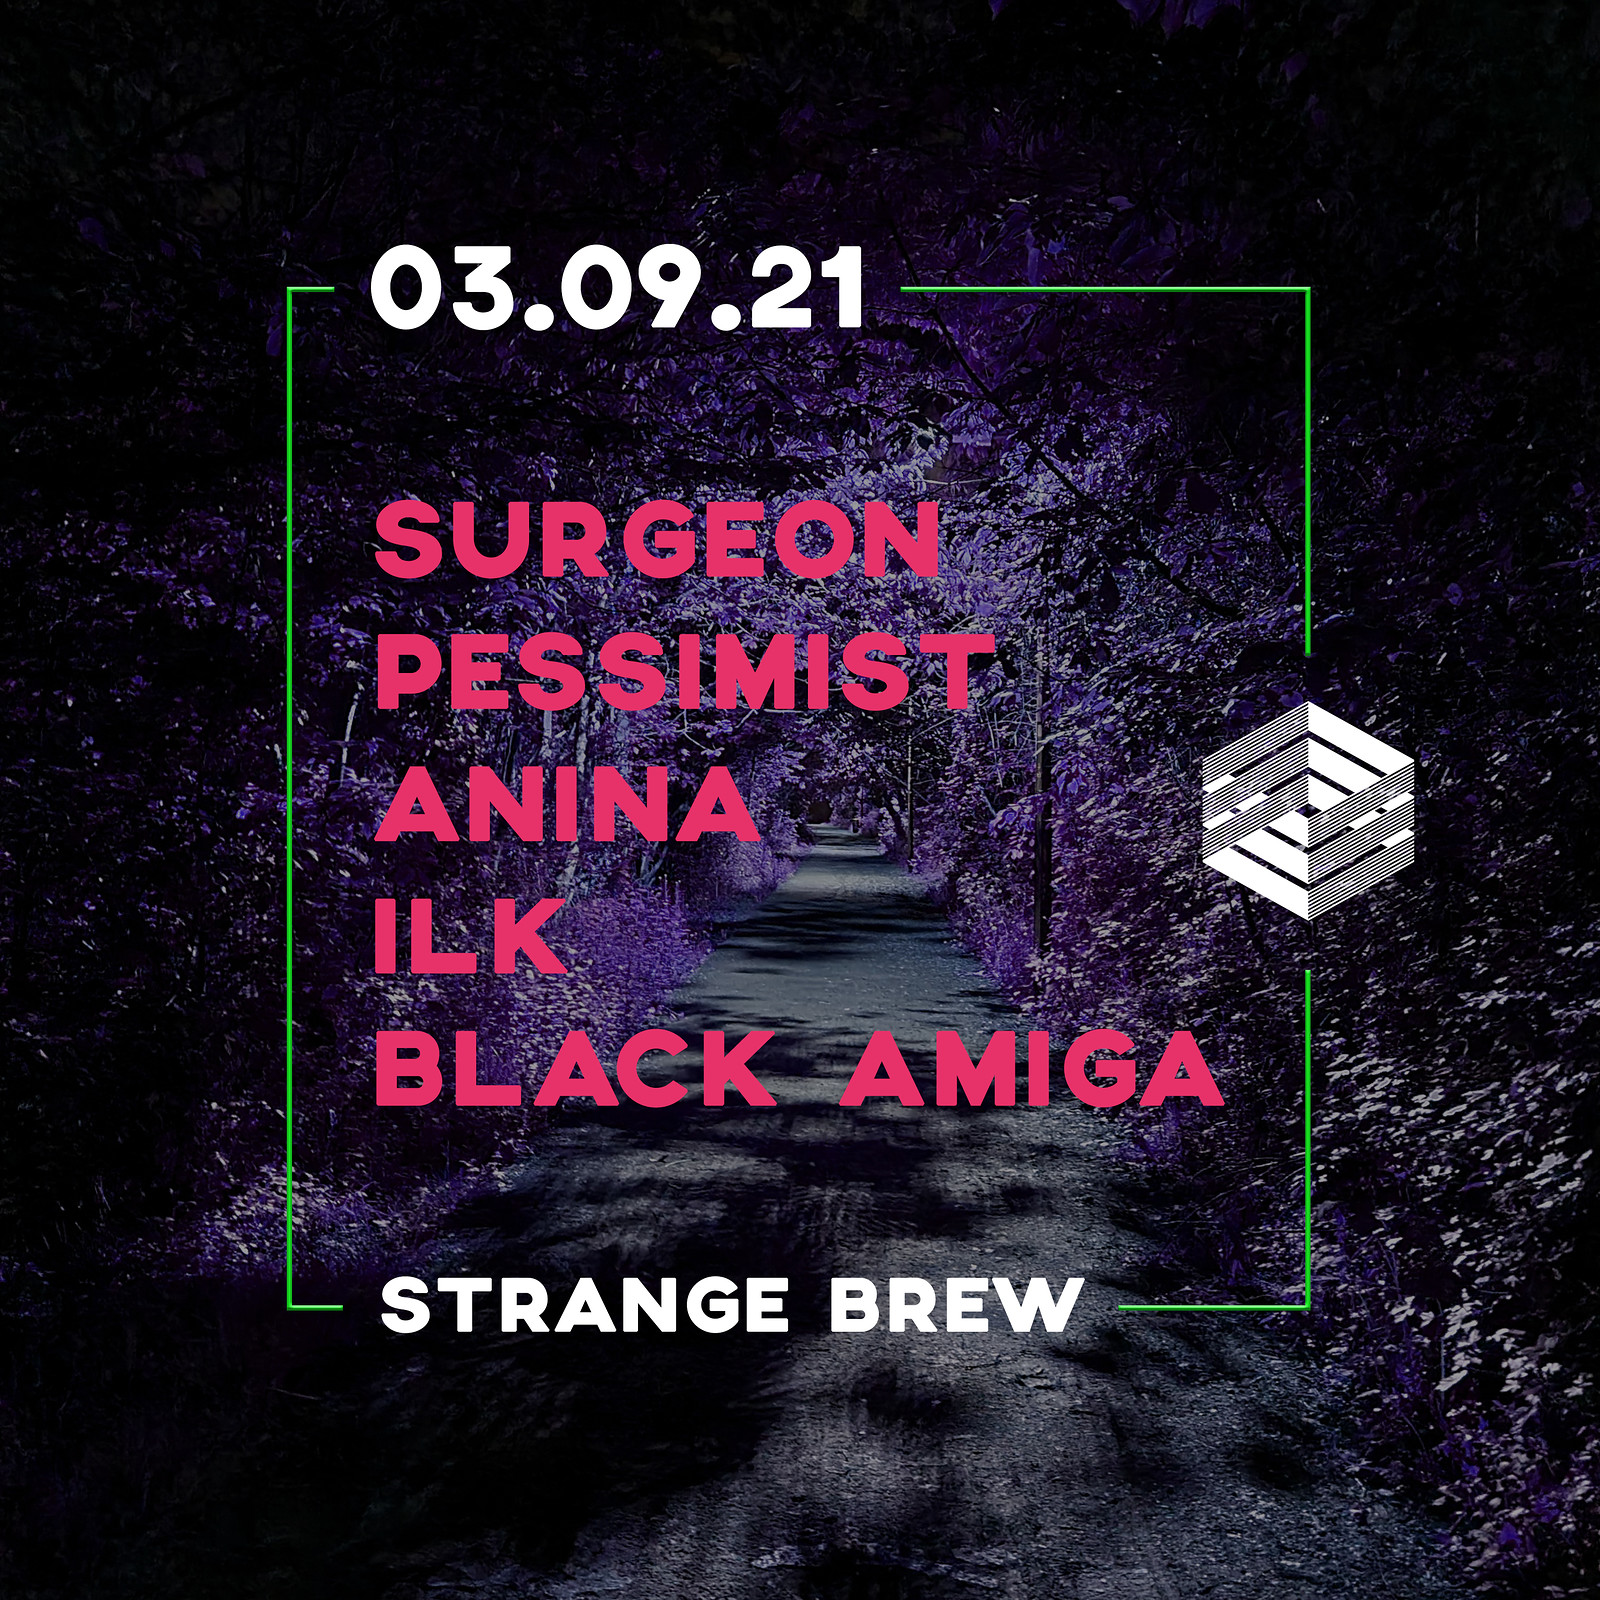 Room 237 w/ Surgeon, Pessimist, Anina & more at Strange Brew